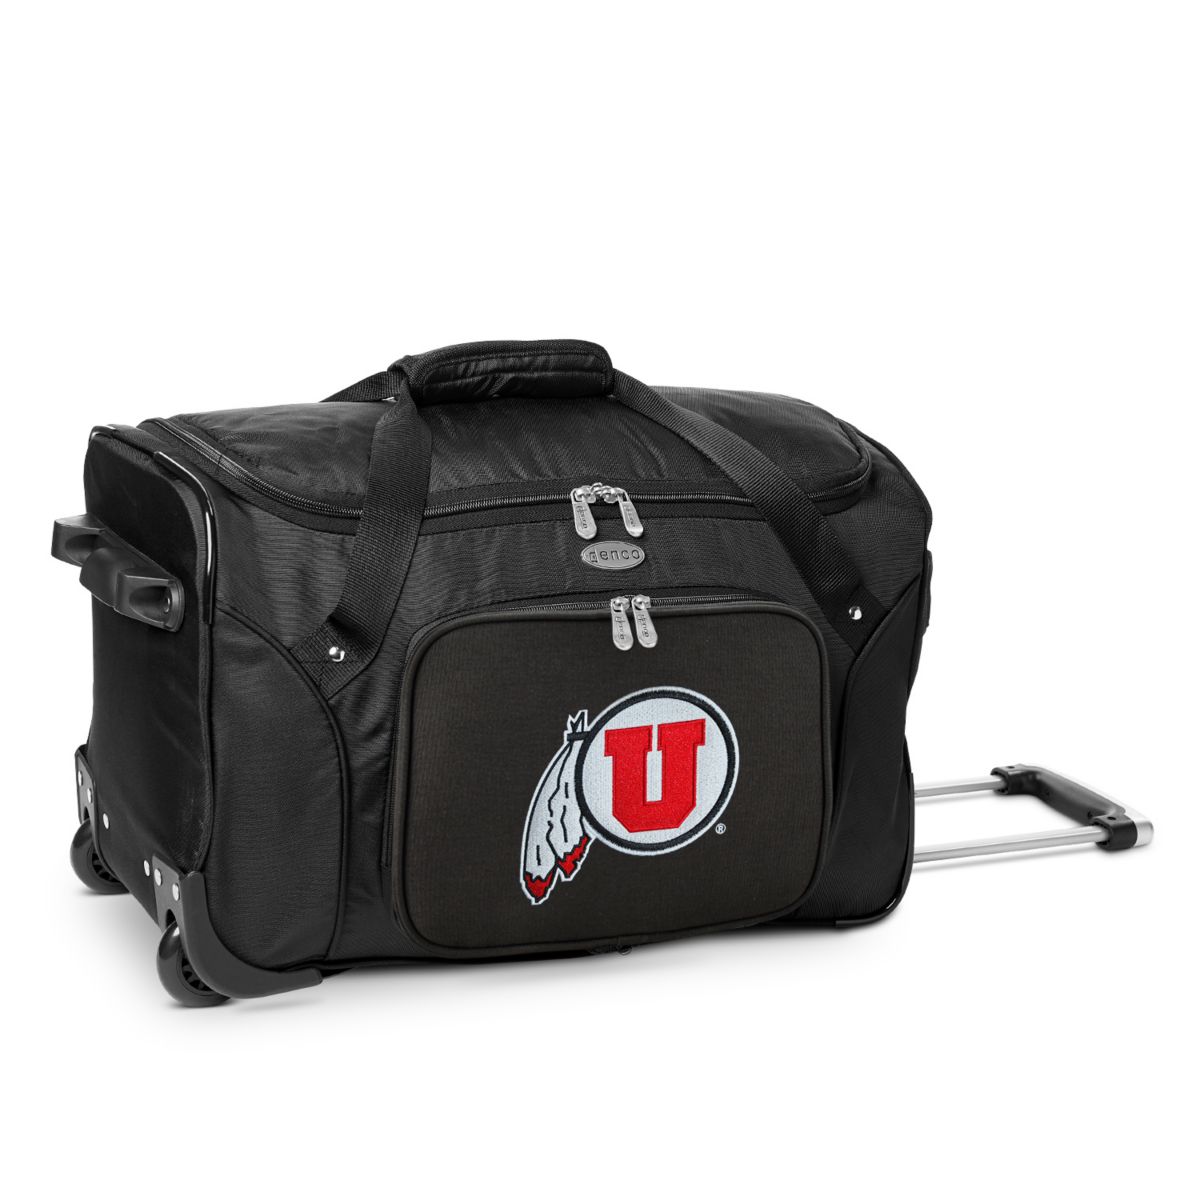 Спортивная сумка Denco Utah Utes на колесиках 22 дюйма Denco